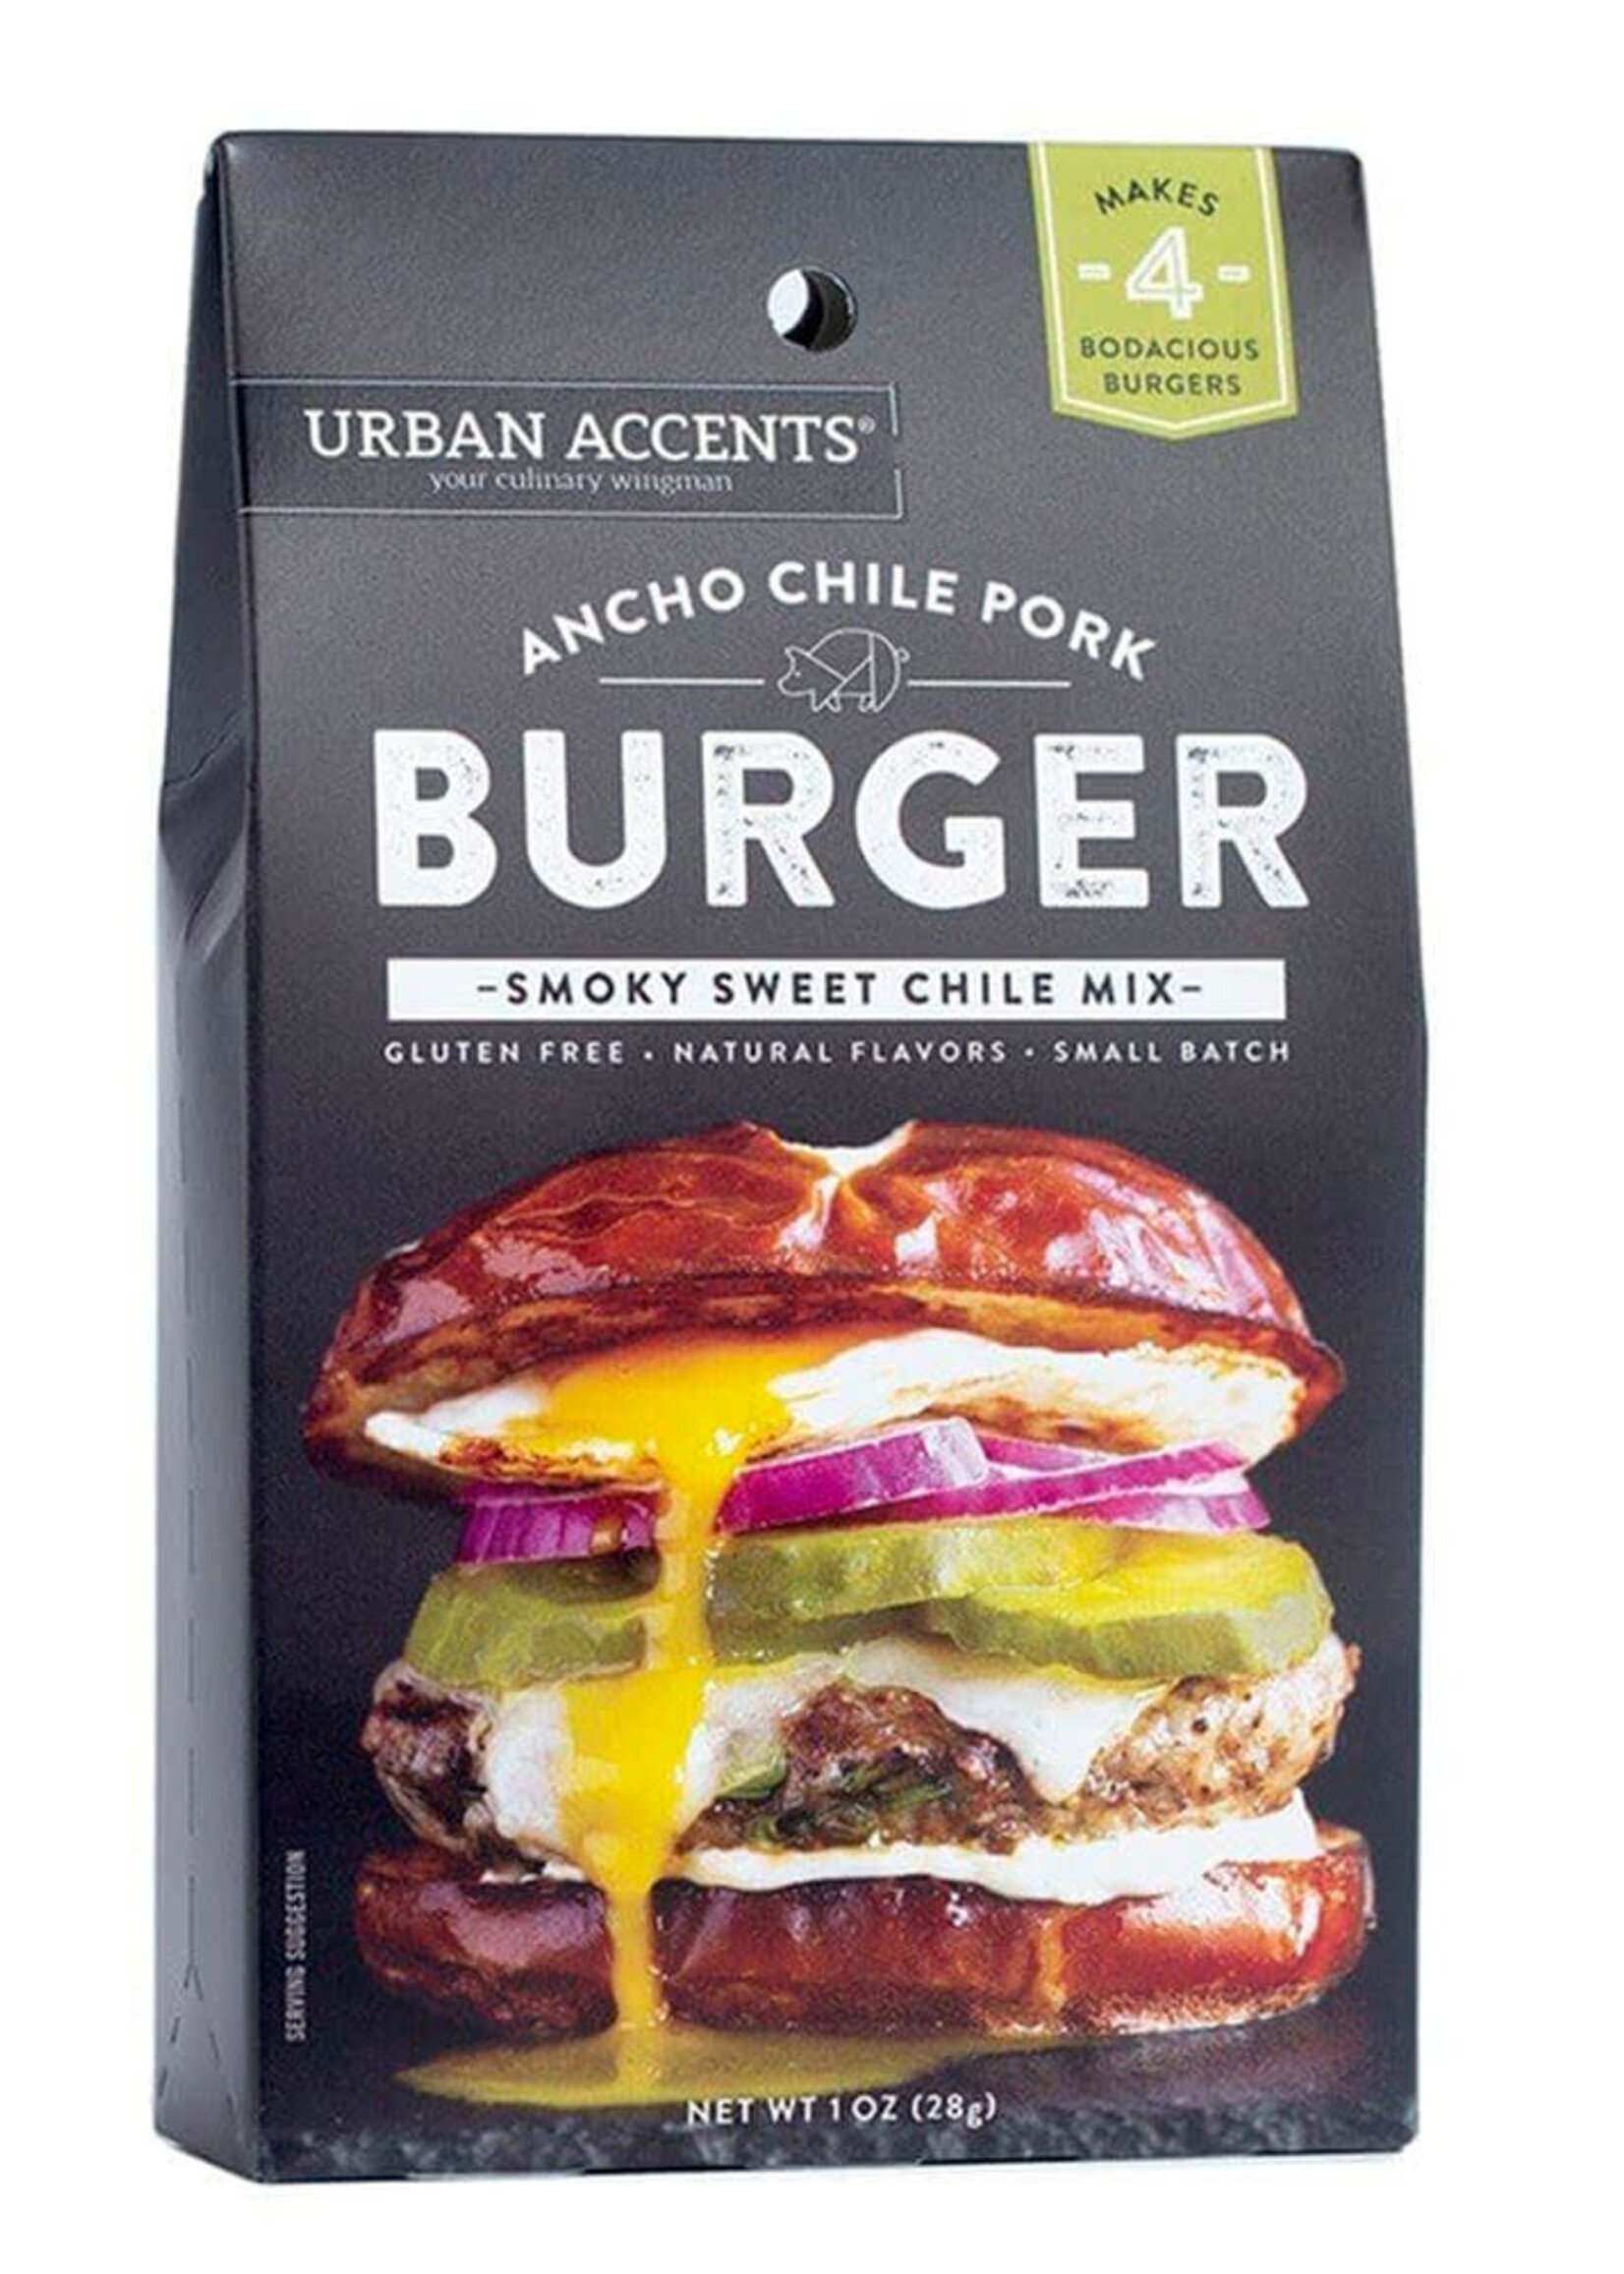 Acho Chile Pork Burger Seasoning Mix